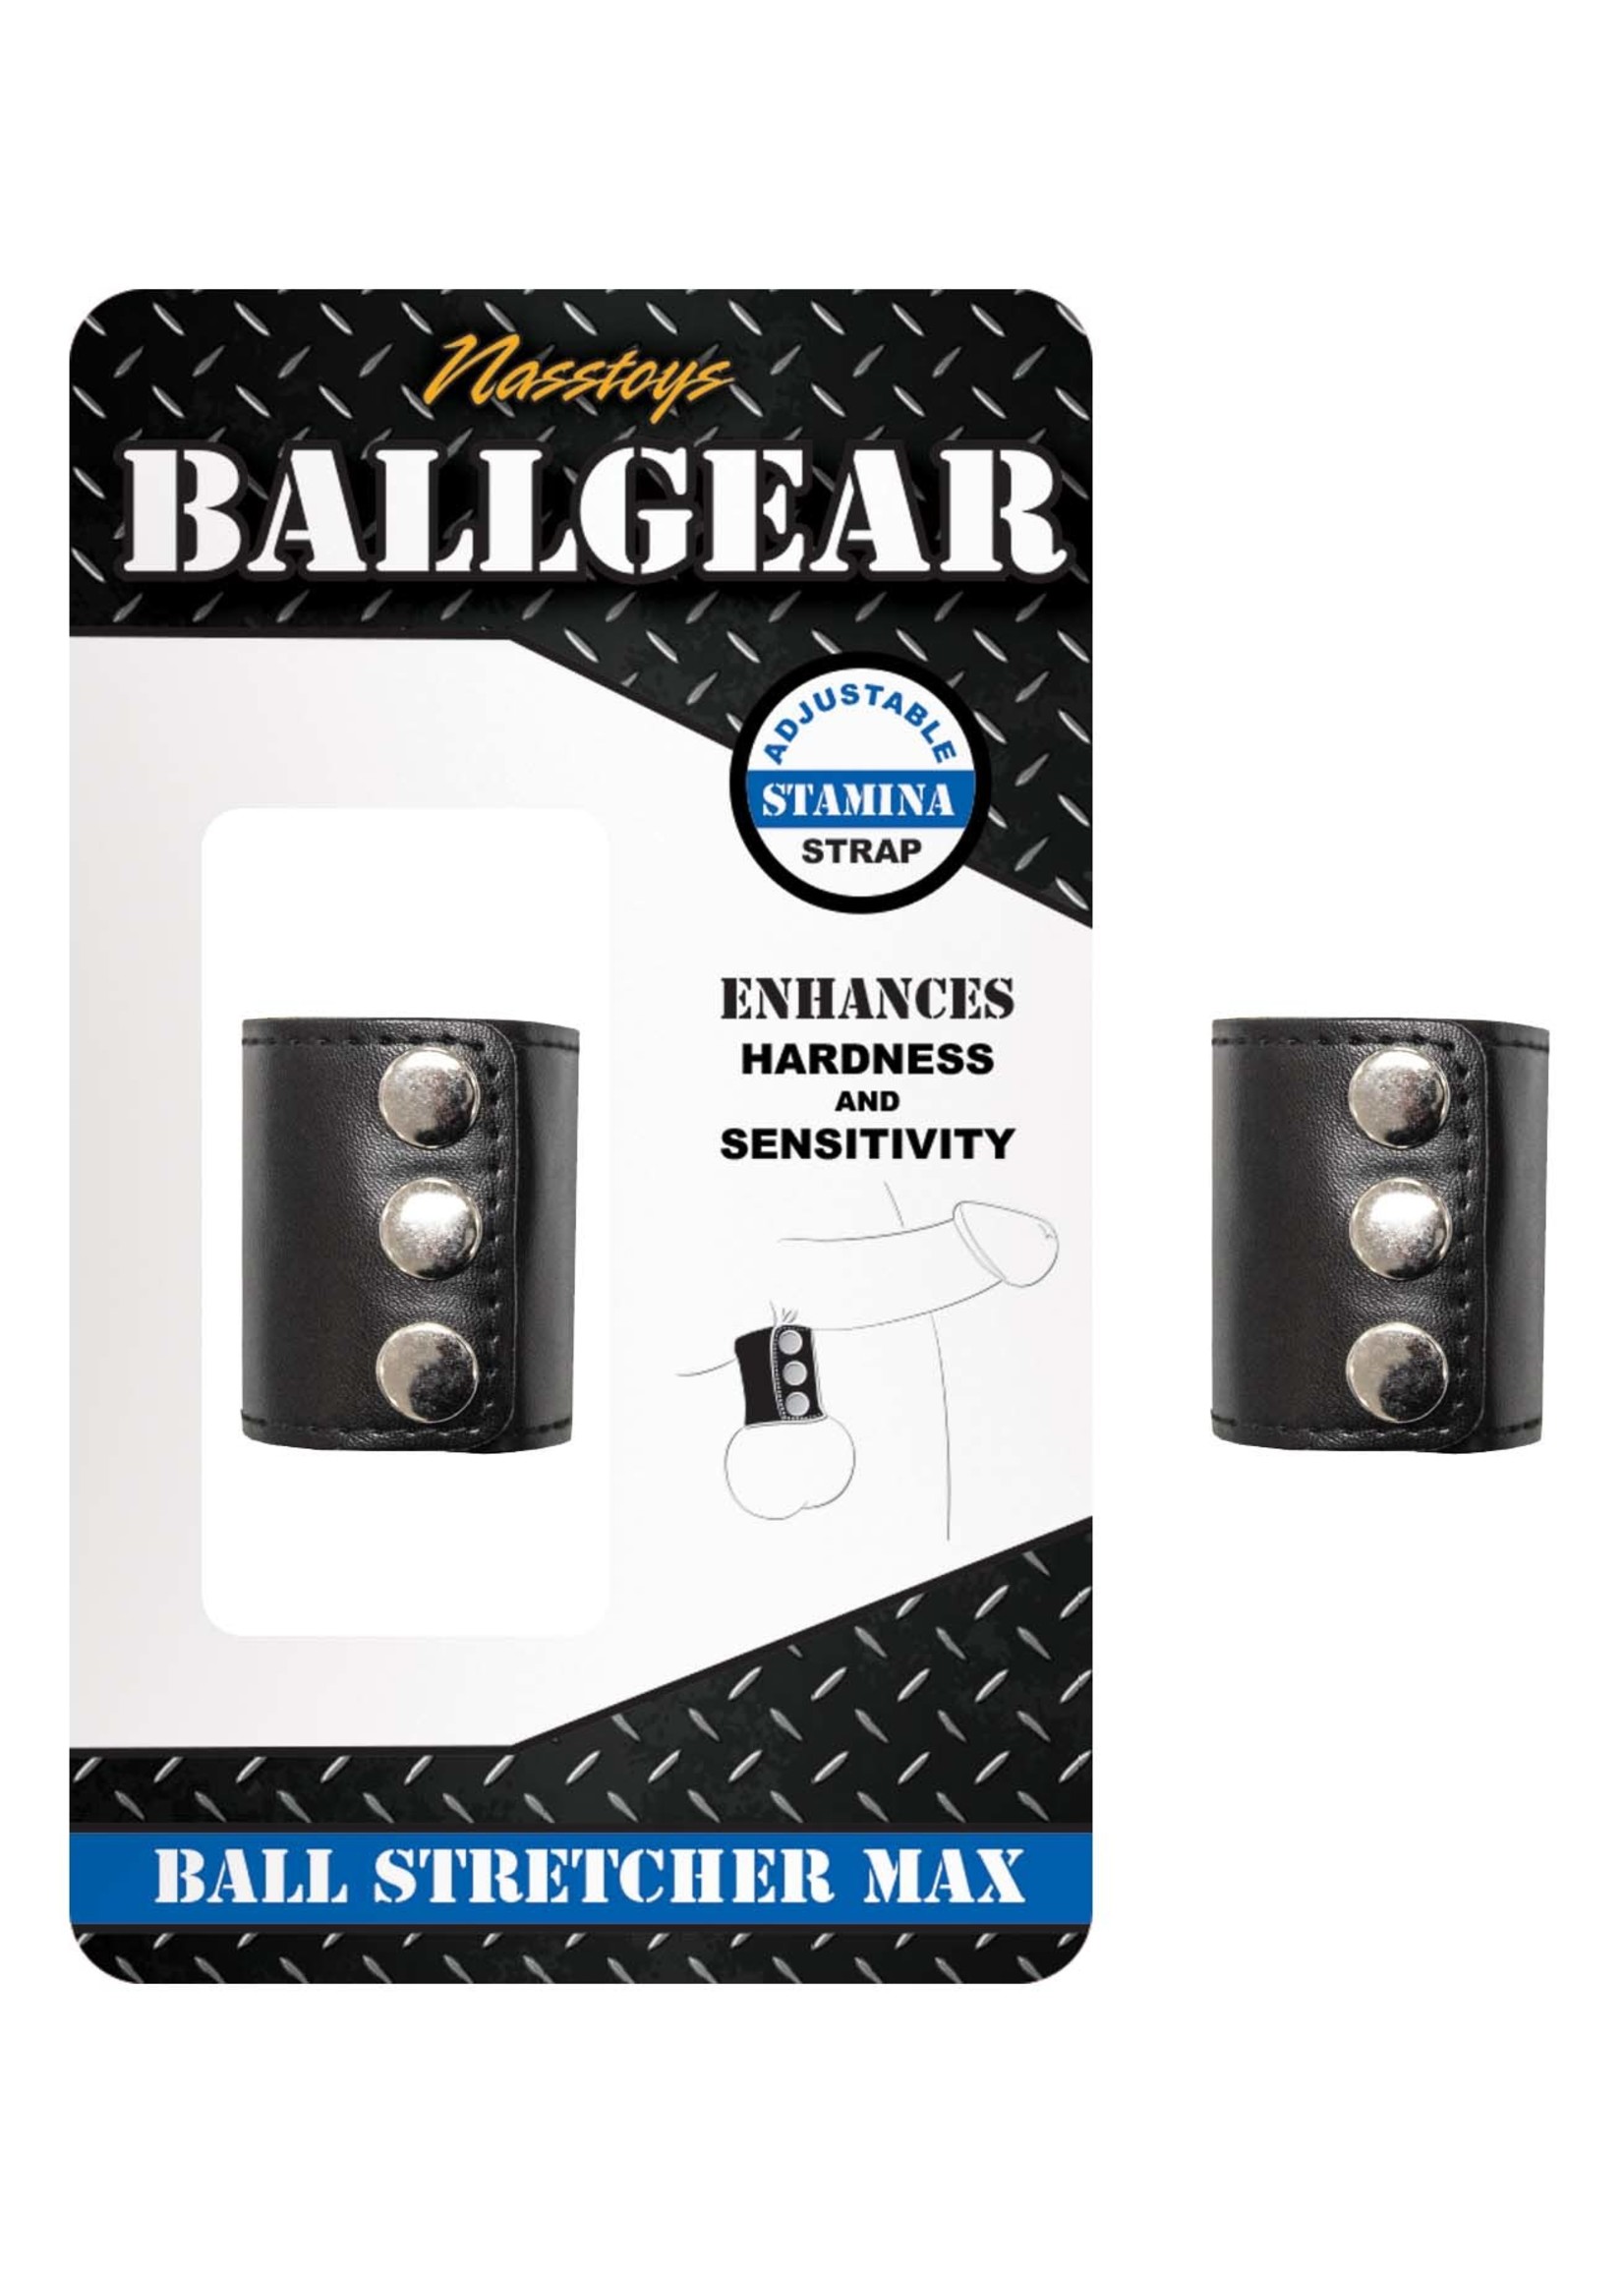 Nasstoys Ballgear Ball Stretcher Max - Black